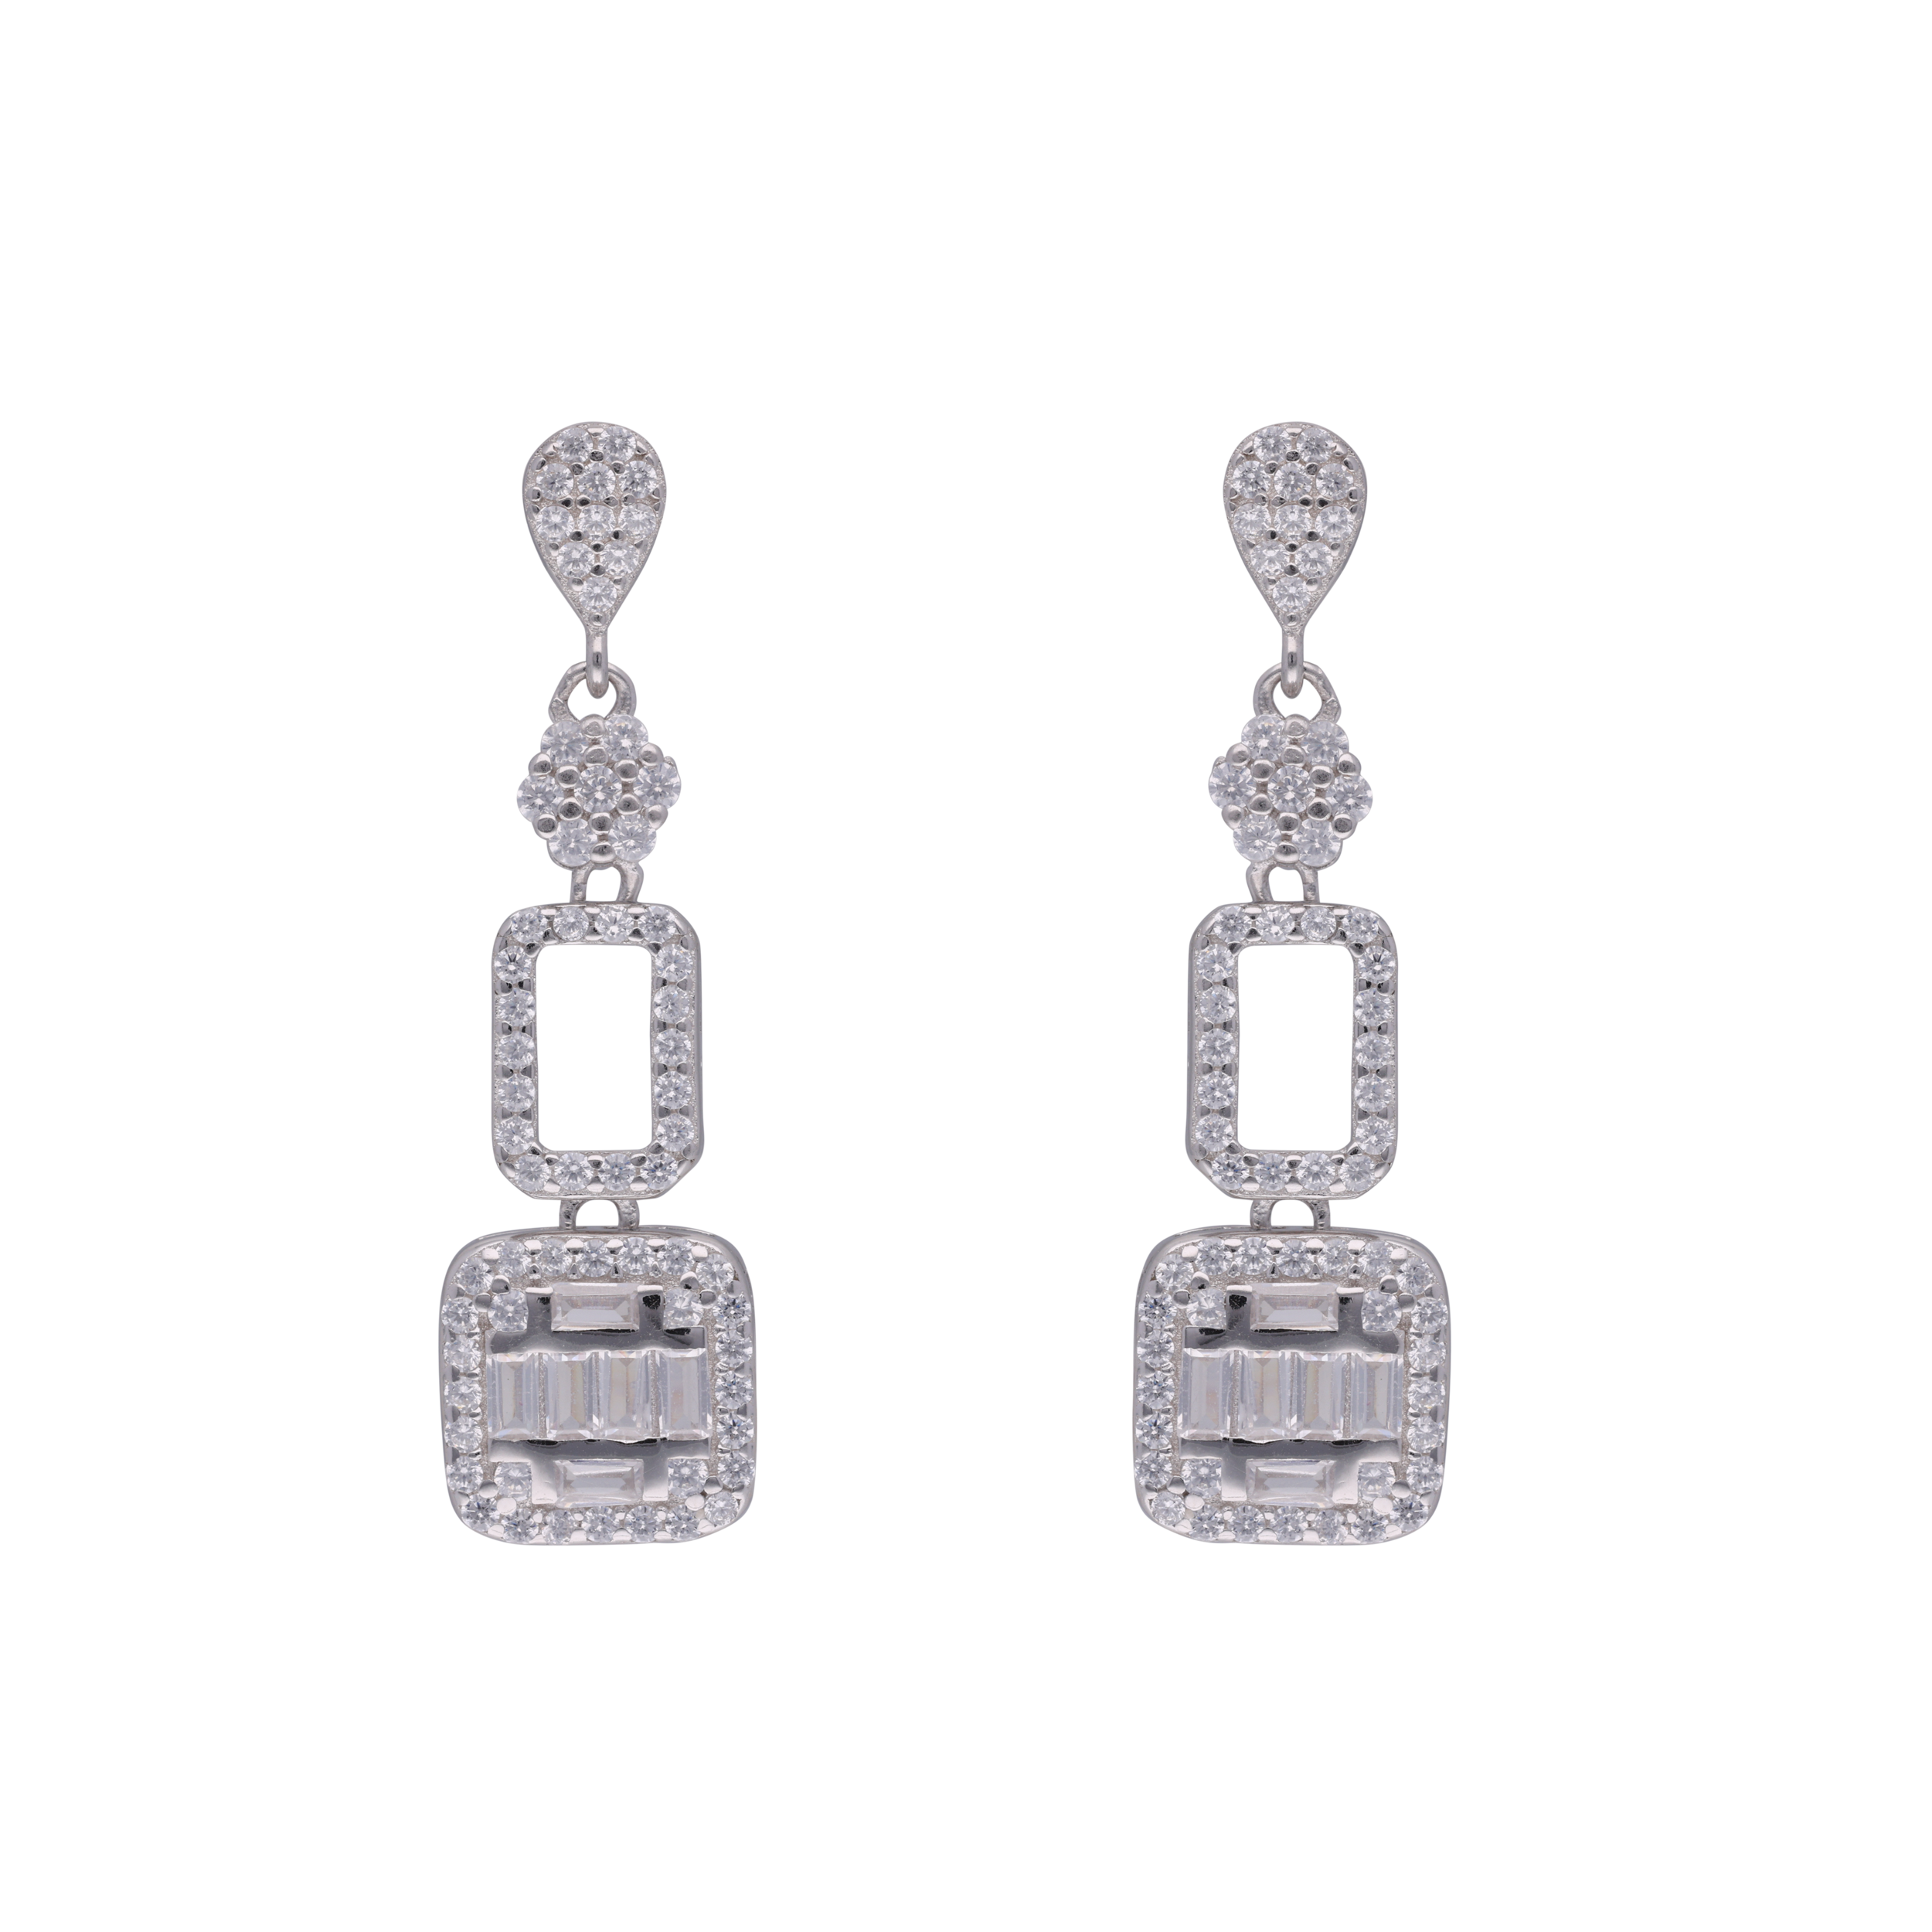 Designer Silver Royal Drop Earrings | SKU: 0019281155, 0019281209, 0019280943, 0019280936